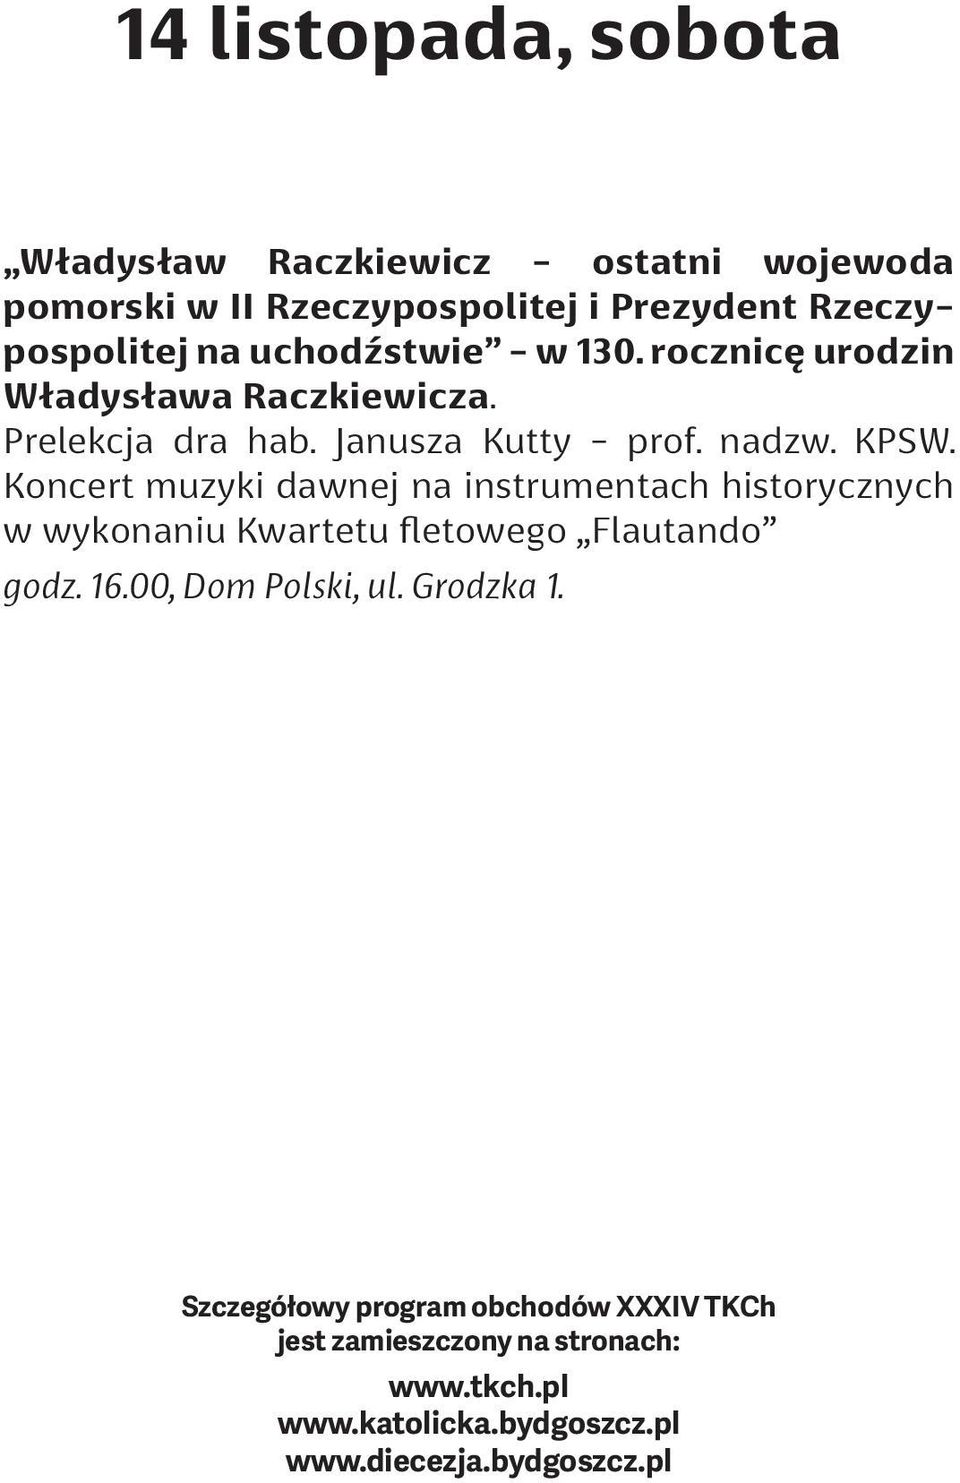 Prelekcja dra hab. Janusza Kutty - prof. nadzw. KPSW.